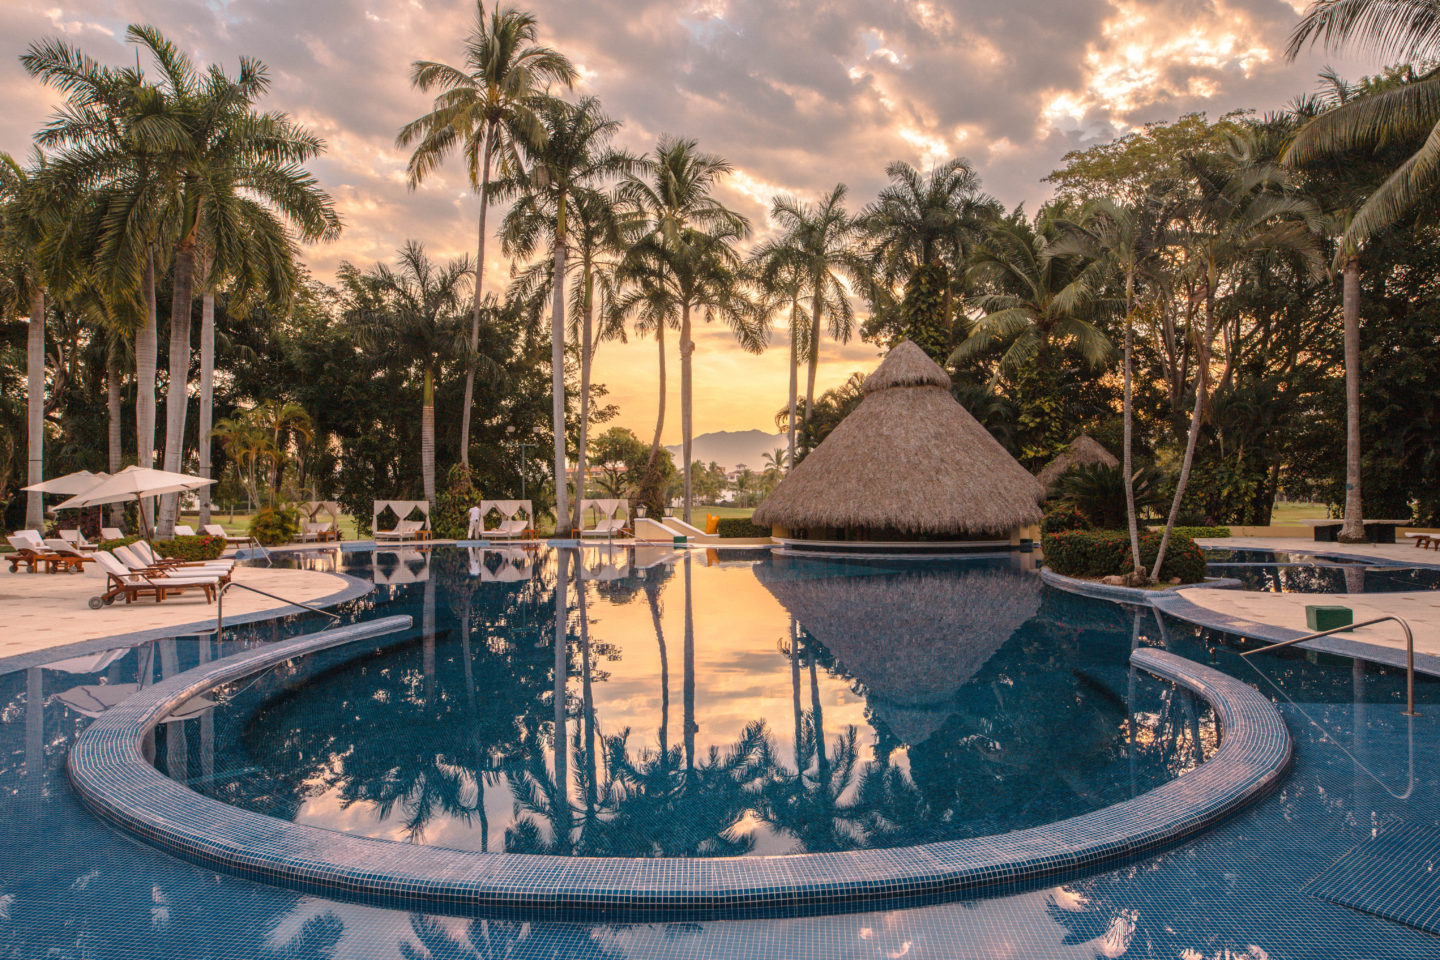 resort pool, mexico, pool at sunrise, tropical pool